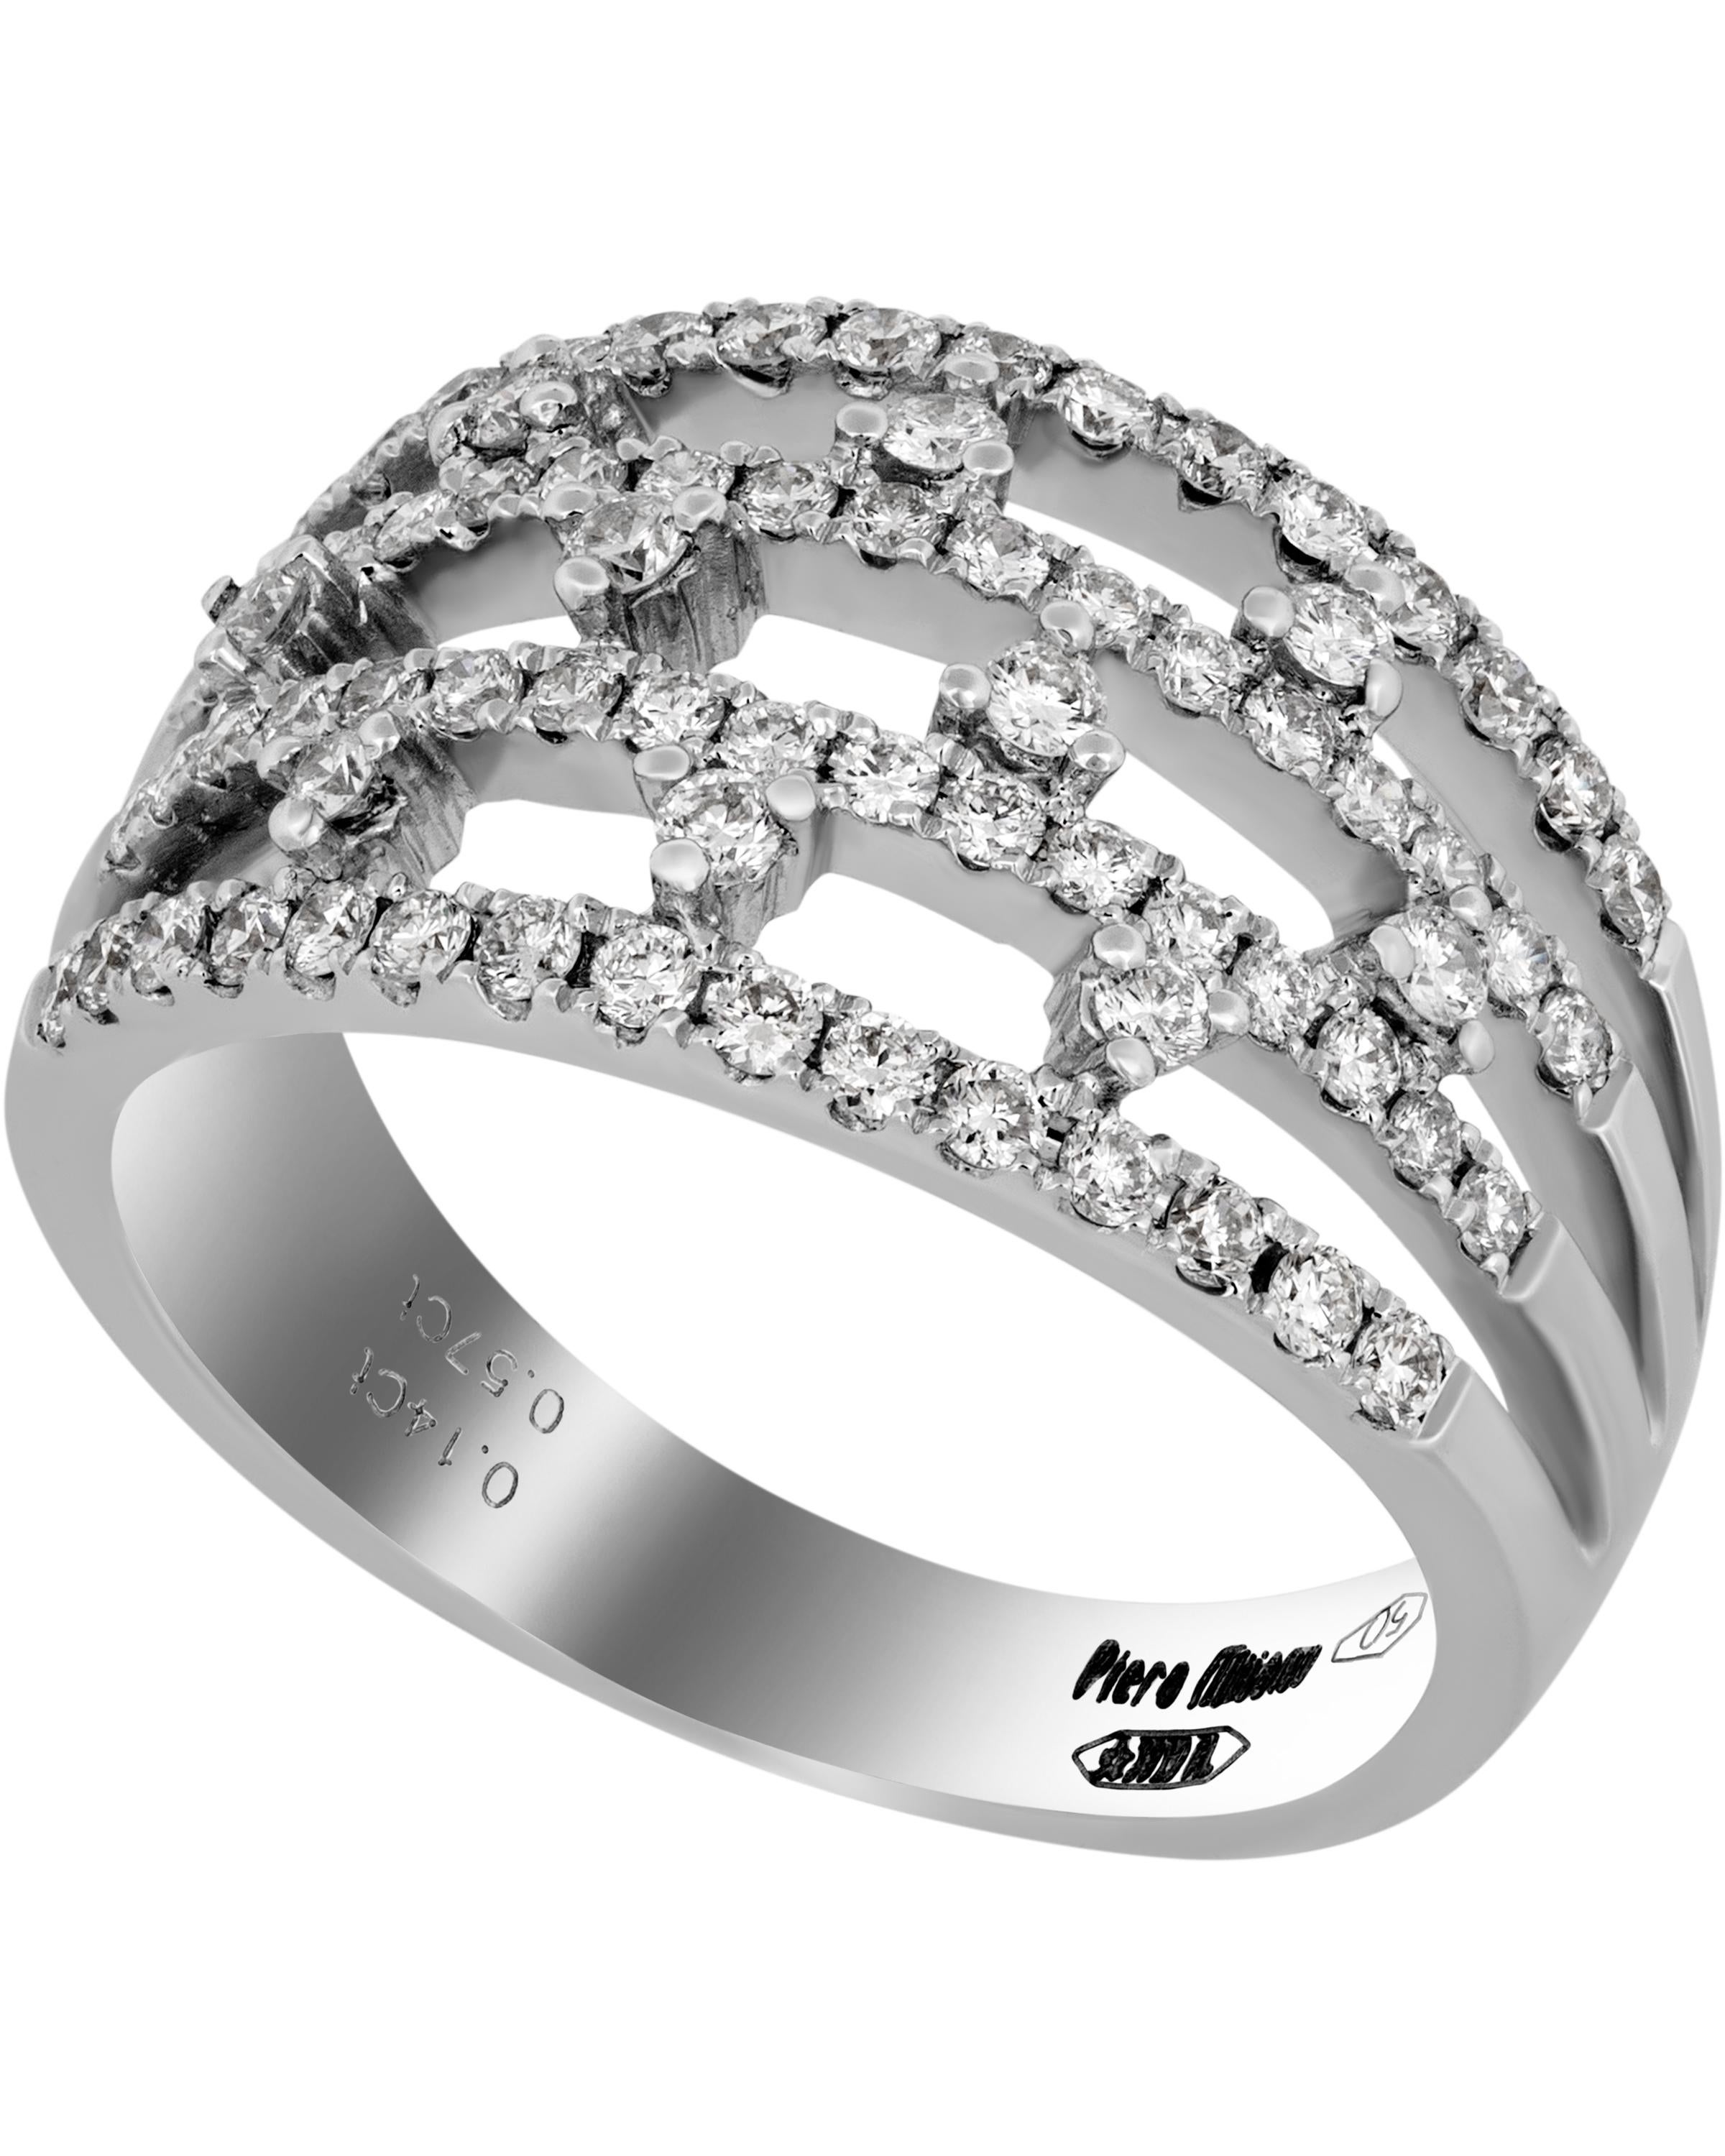 Contemporary Piero Milano 18K White Gold Diamond Ring Sz 6.5 For Sale